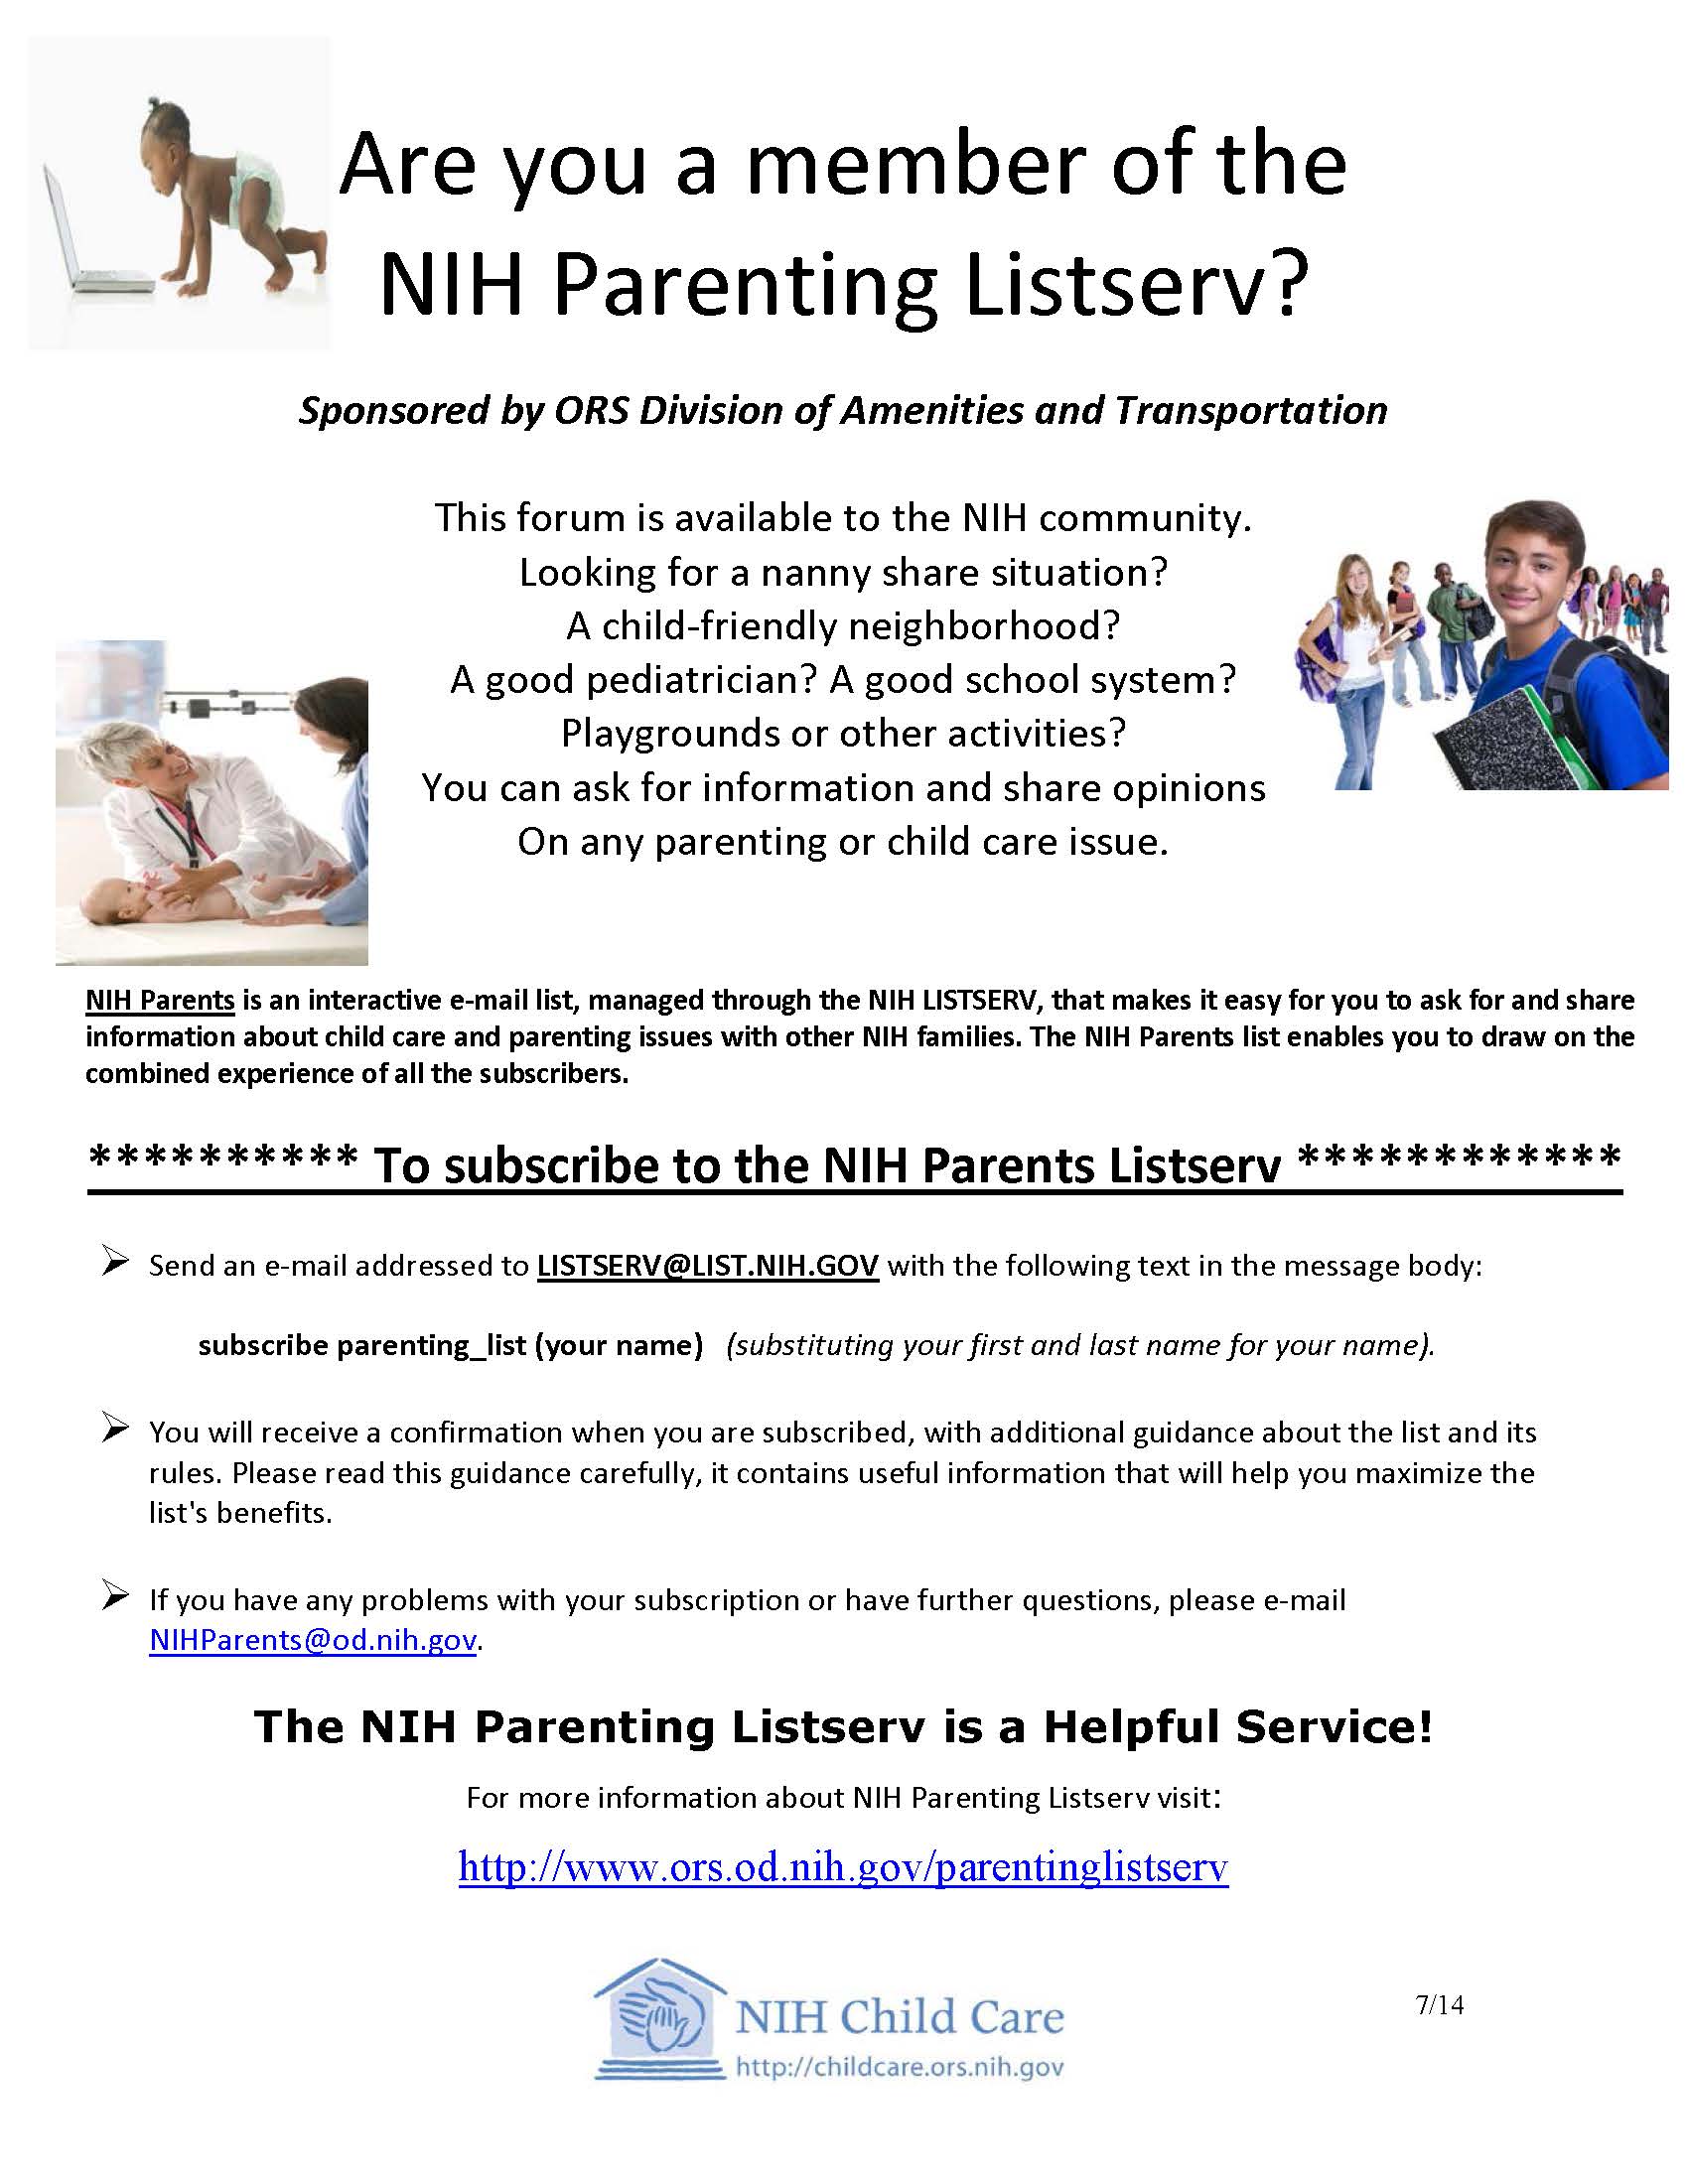 NIH Parenting Listserv